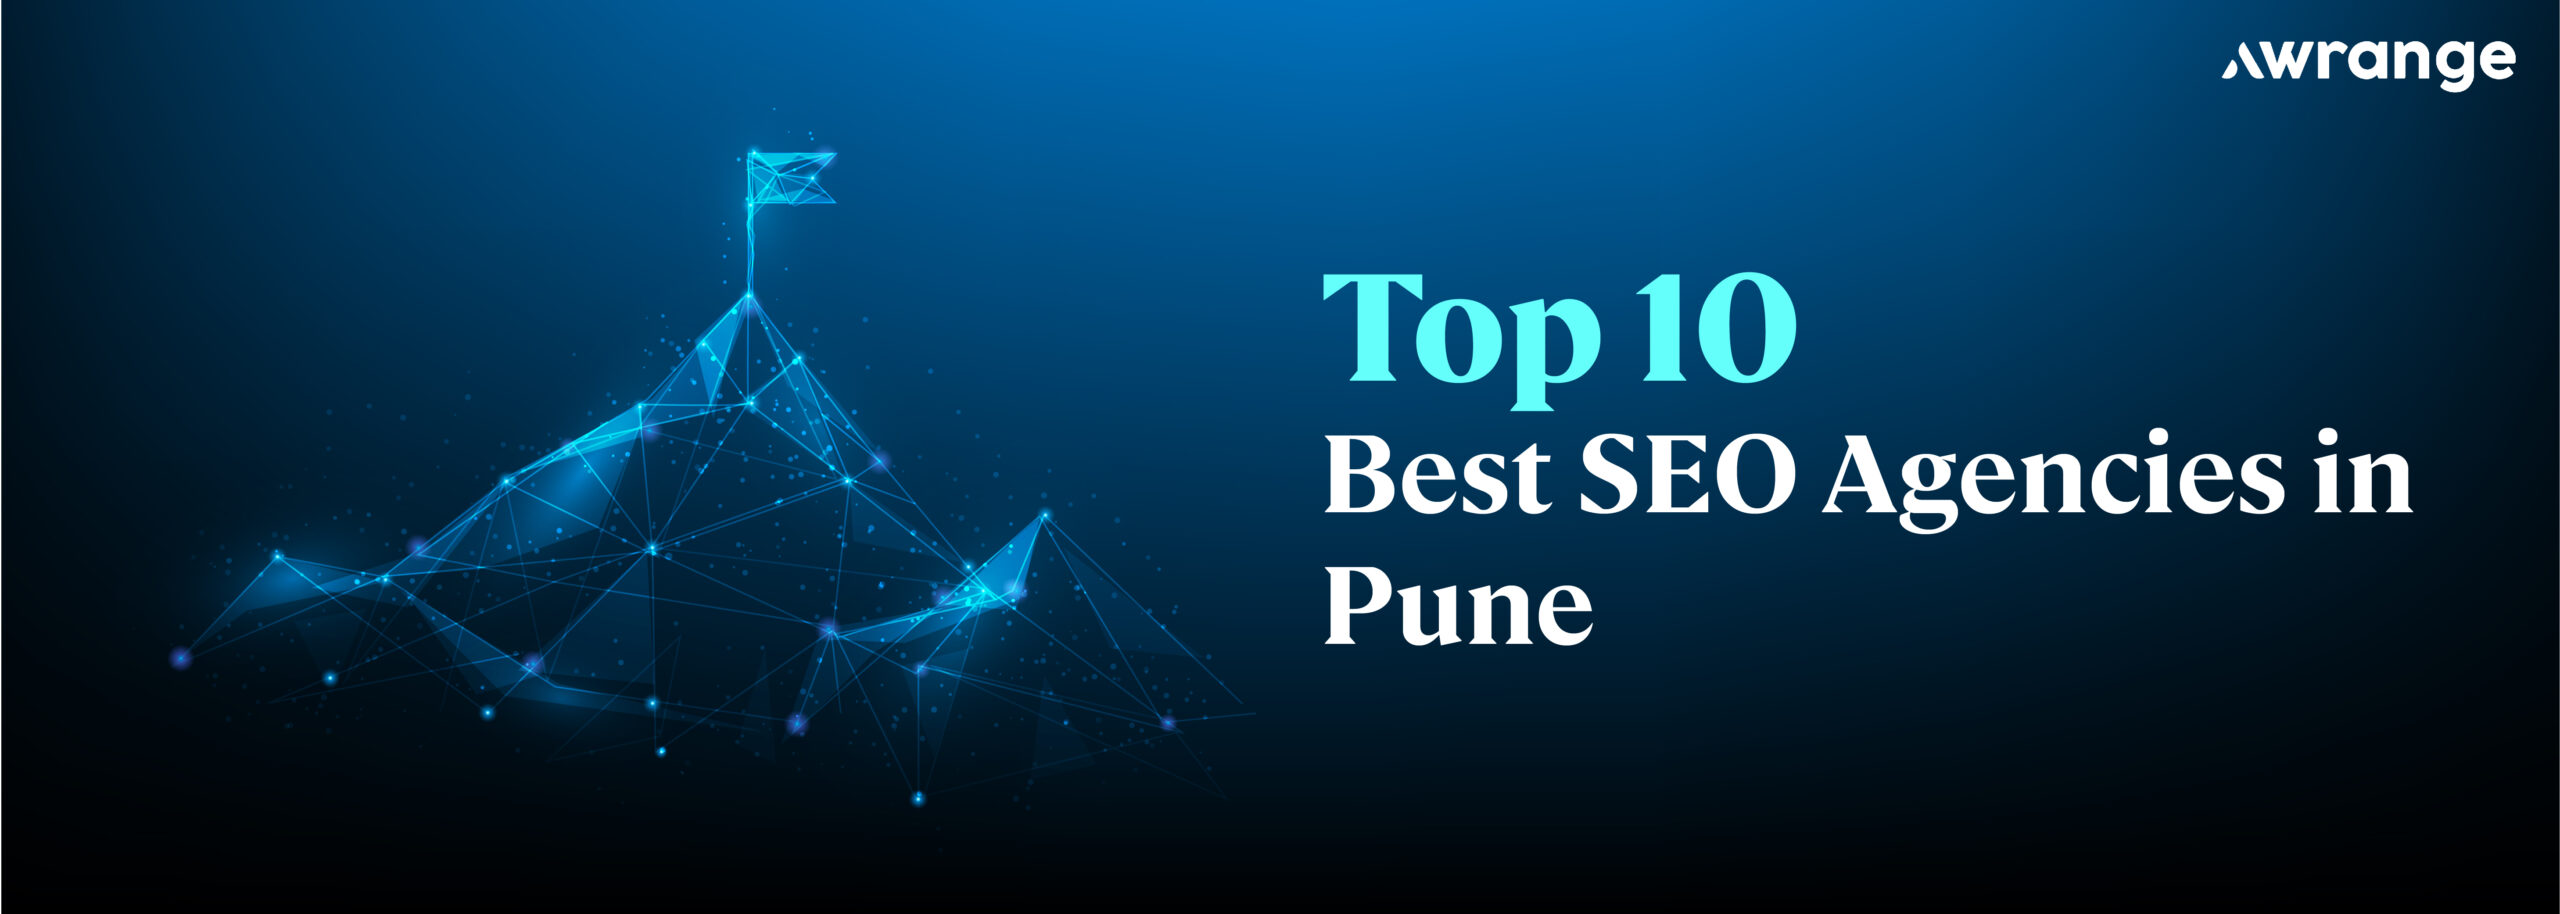 Top 10 SEO Agencies in Pune